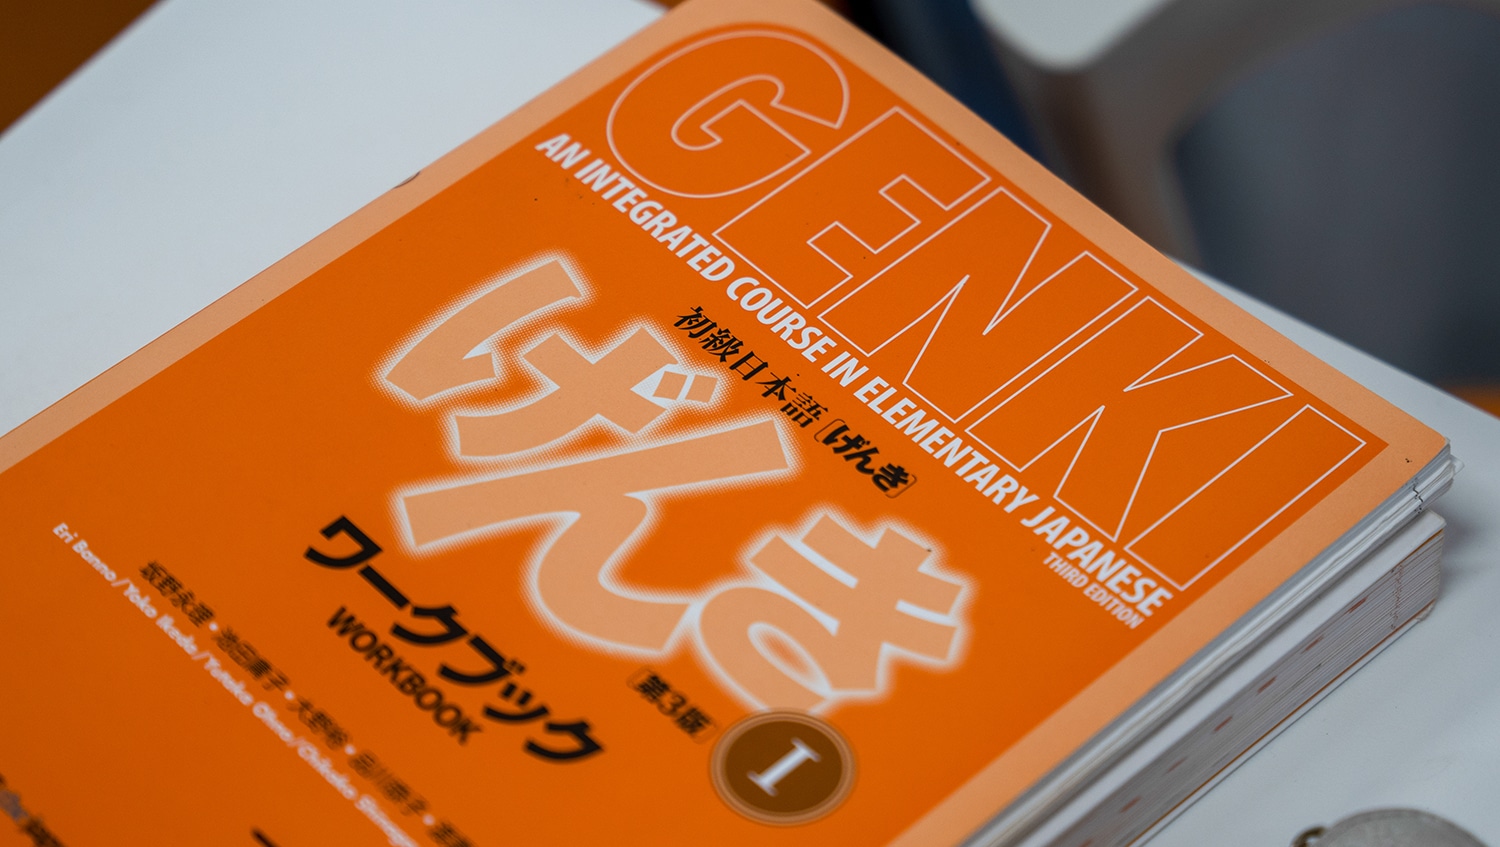 Genki textbook on desk